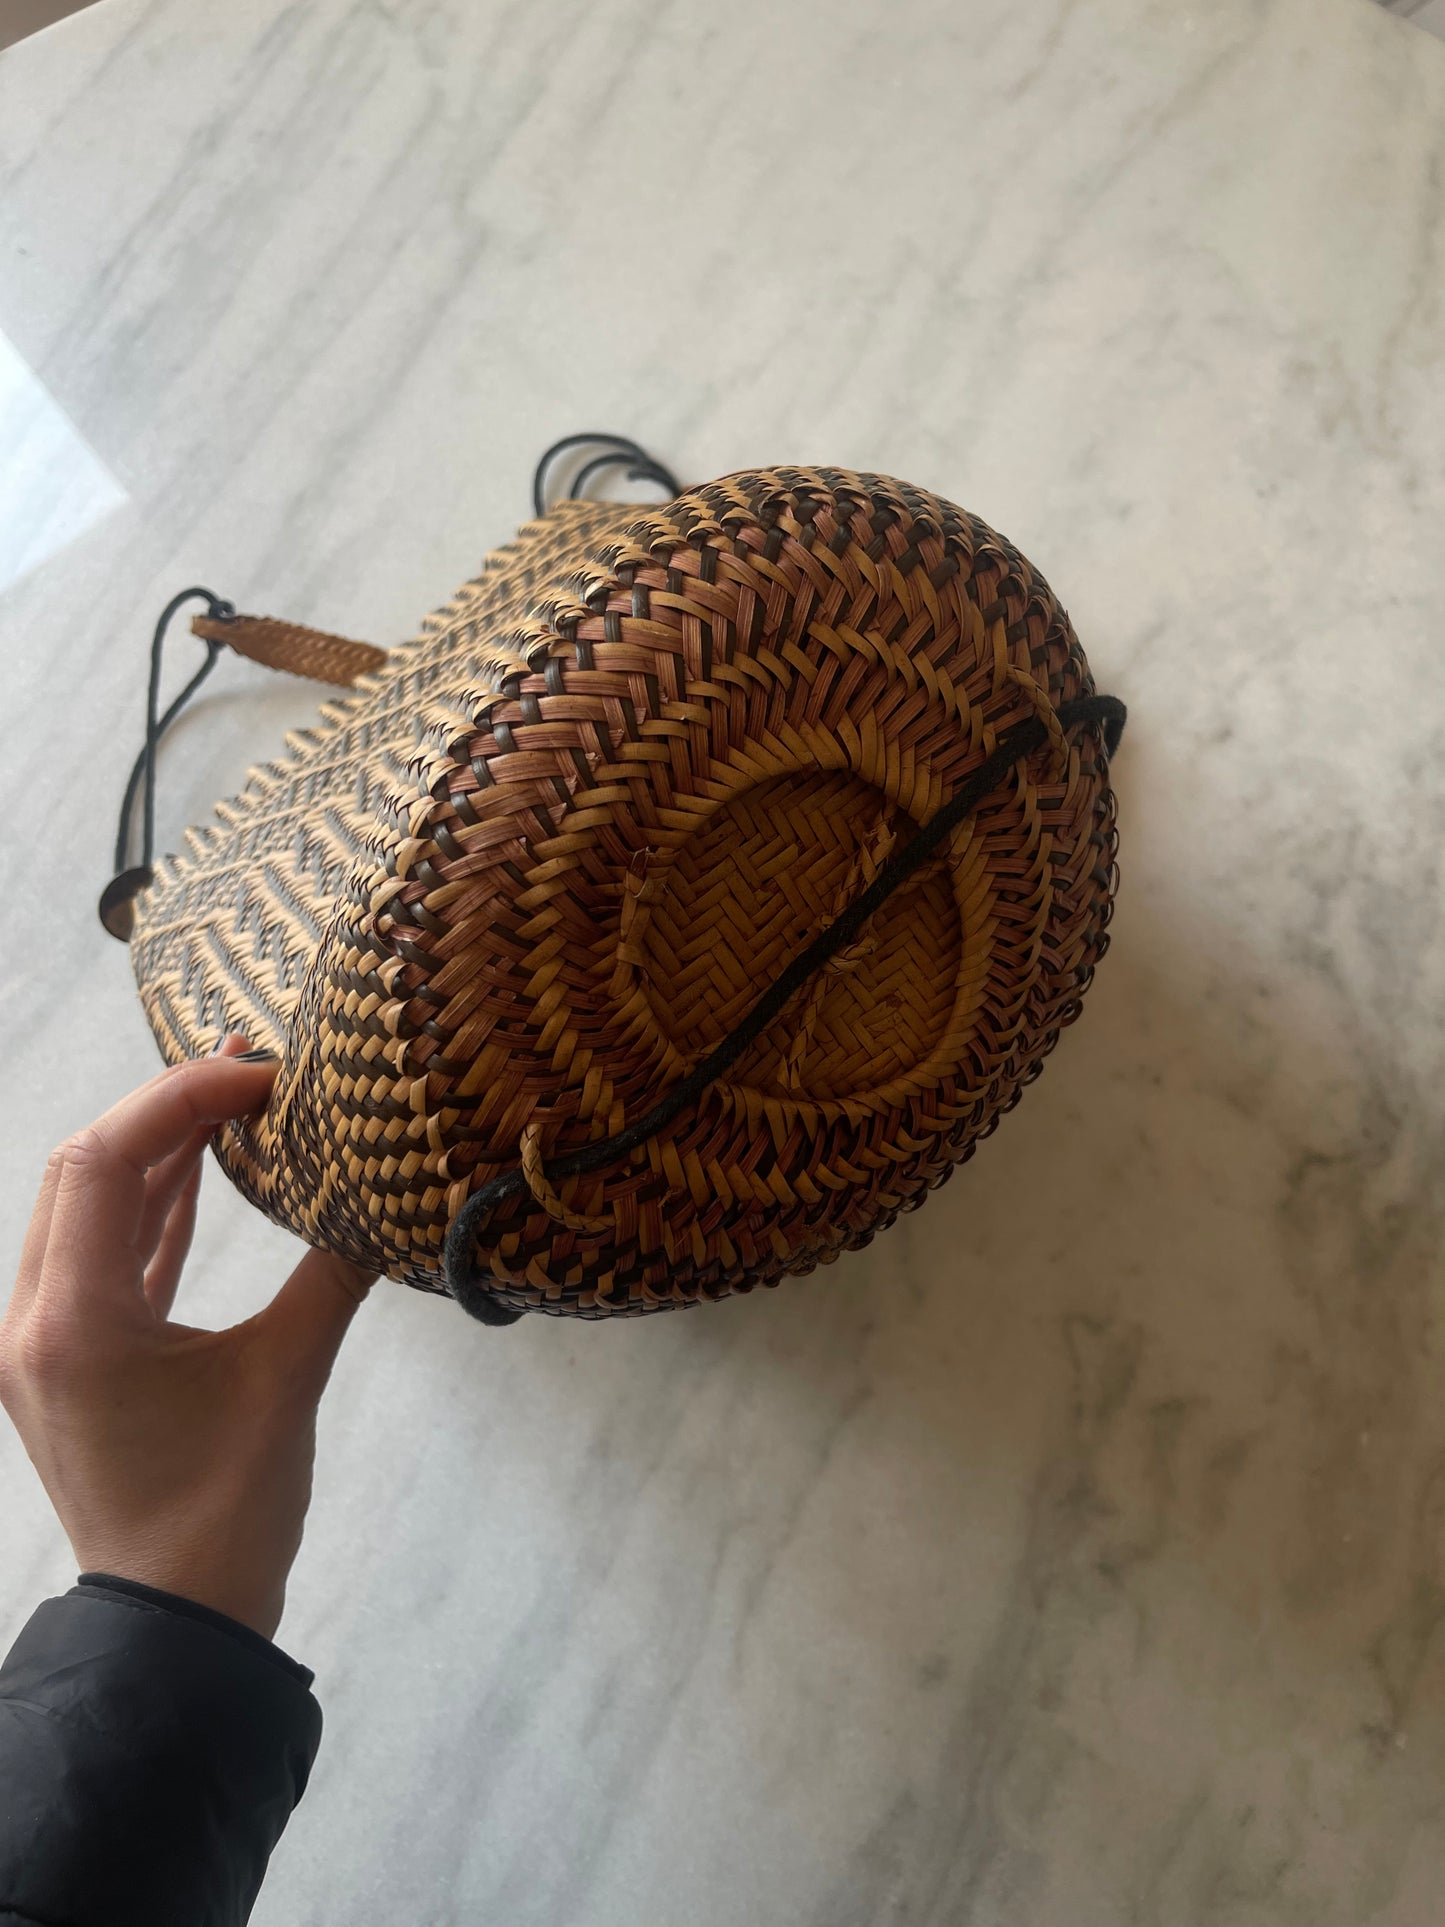 Handmade straw bag